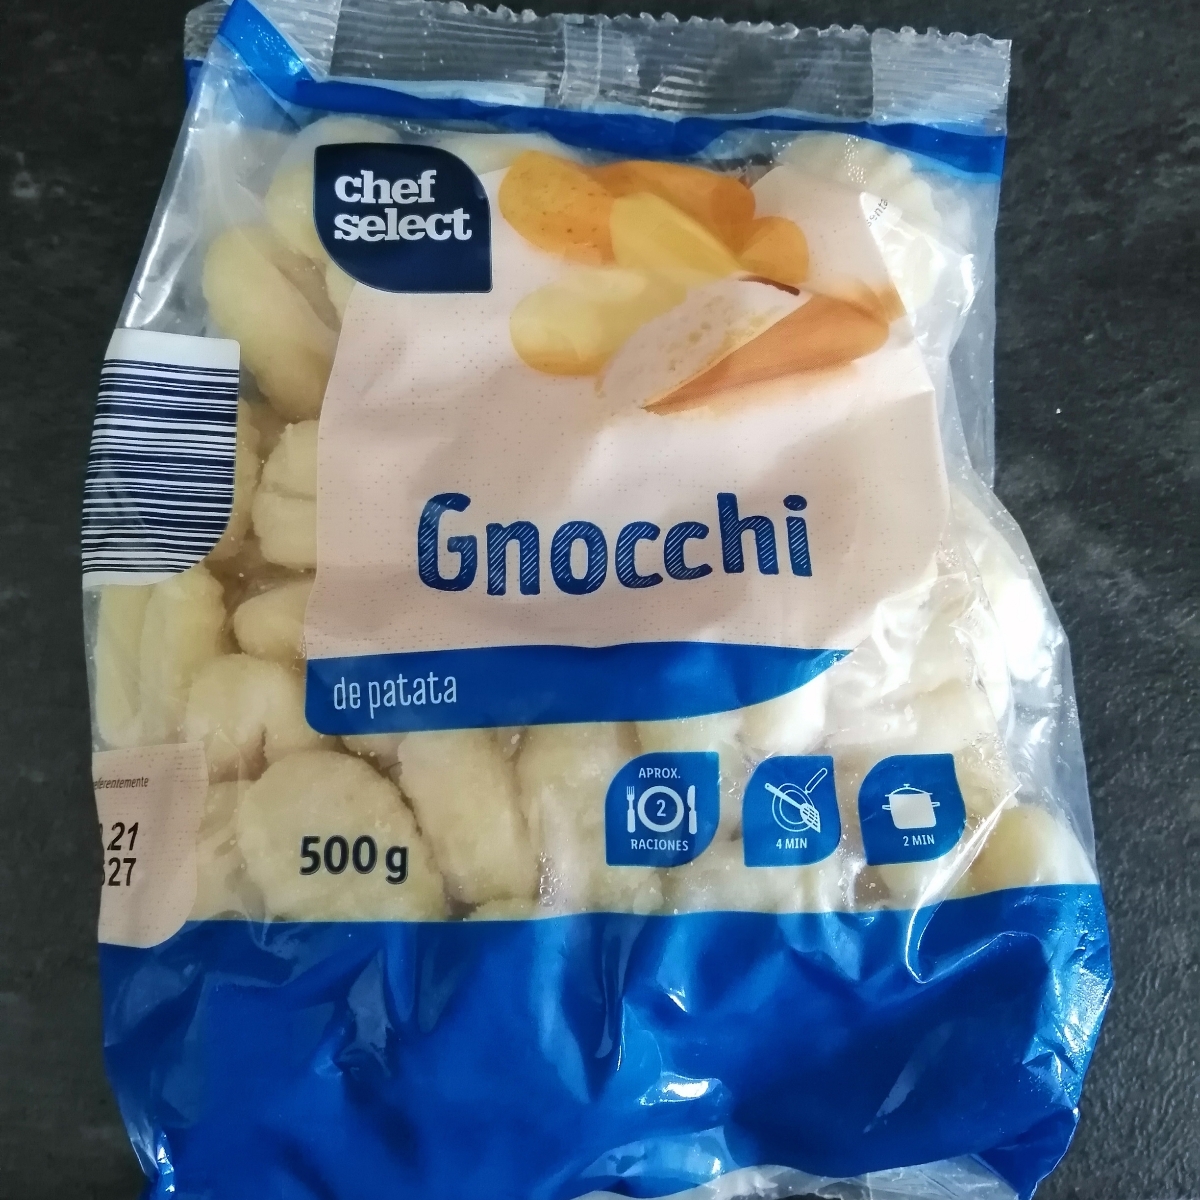 Select | Gnocchi Review abillion Chef